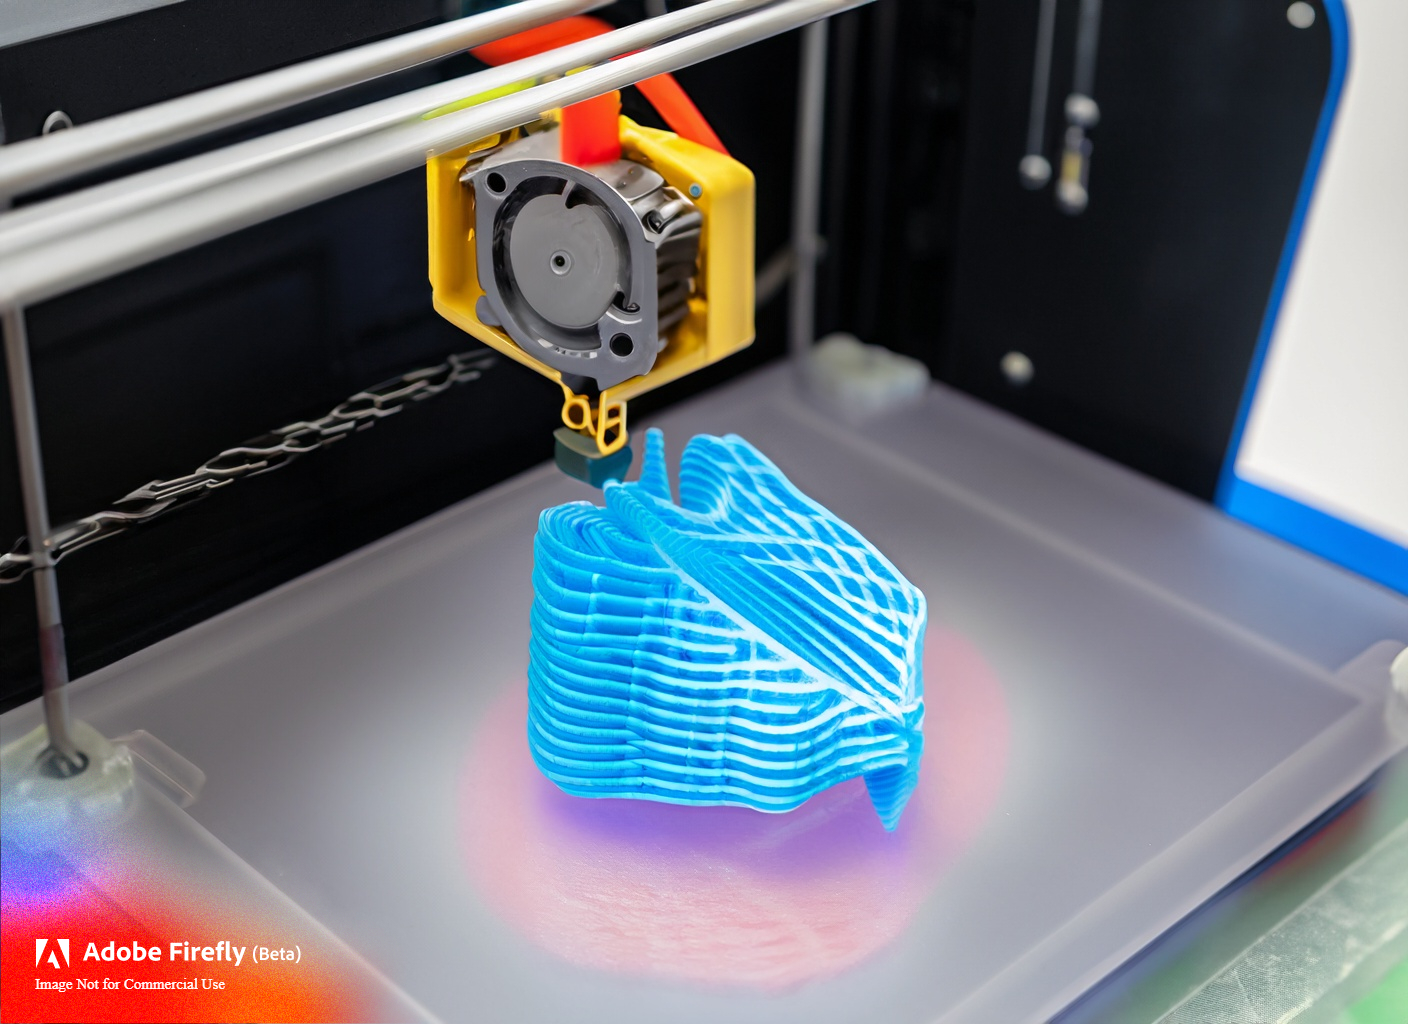 A colorful 3D printer creating an object with polypropylene filament, demonstrating the material's versatility and durability. طابعة ثلاثية الأبعاد ملونة تقوم بإنشاء كائن باستخدام خيوط البوليبروبيلين، مما يوضح تعدد استخدامات هذه المادة ومتانتها.